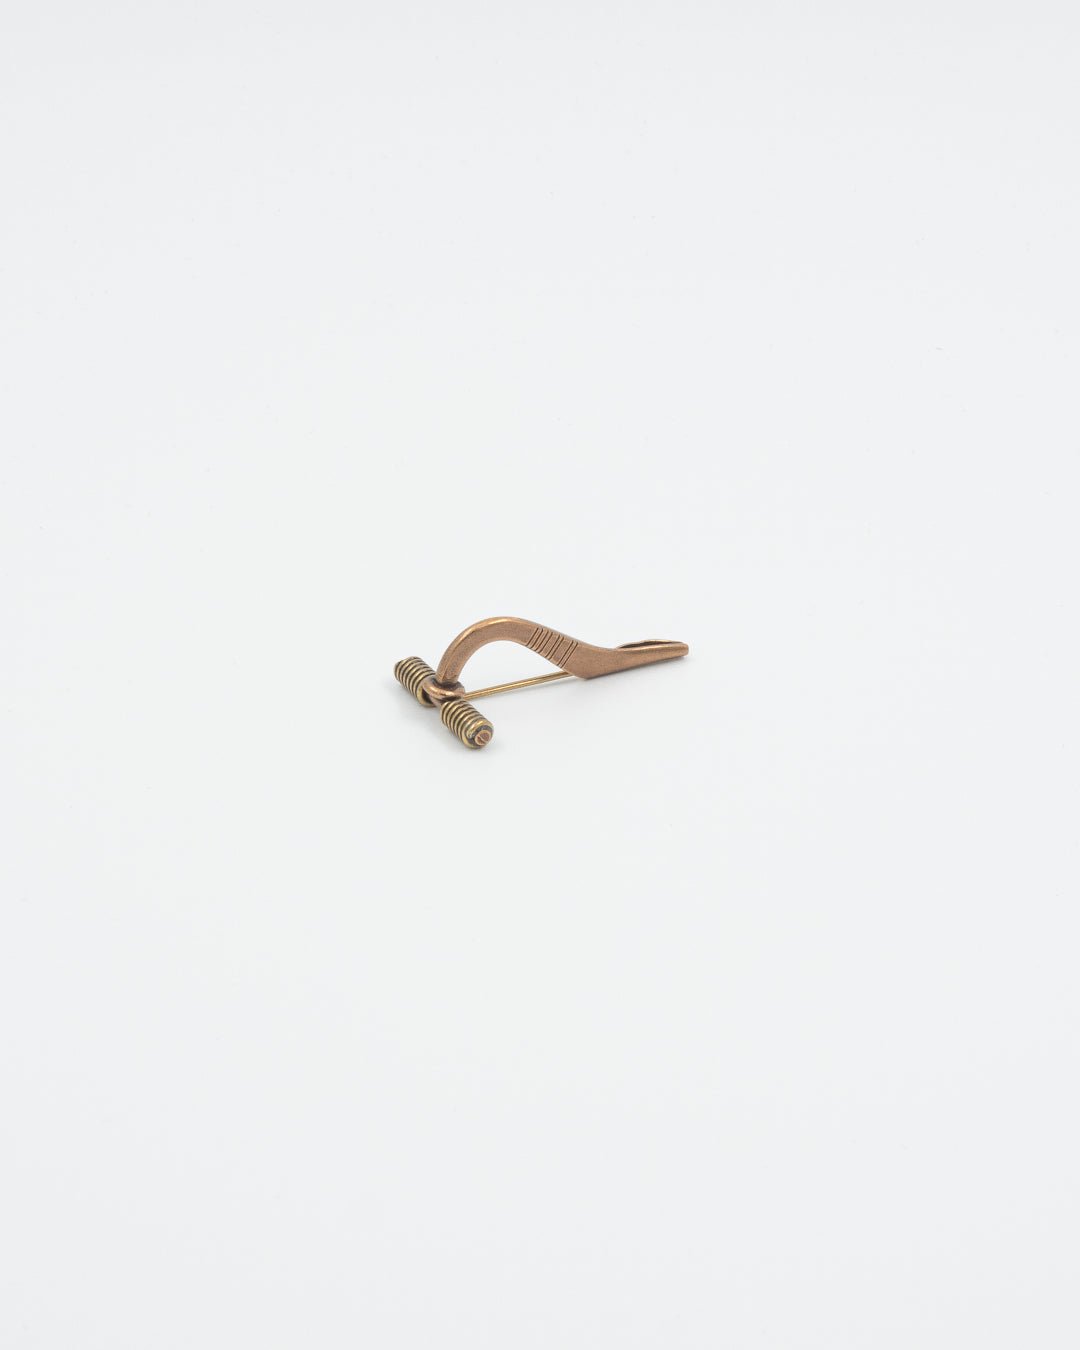 Held safety pin ancestor brooch bronze